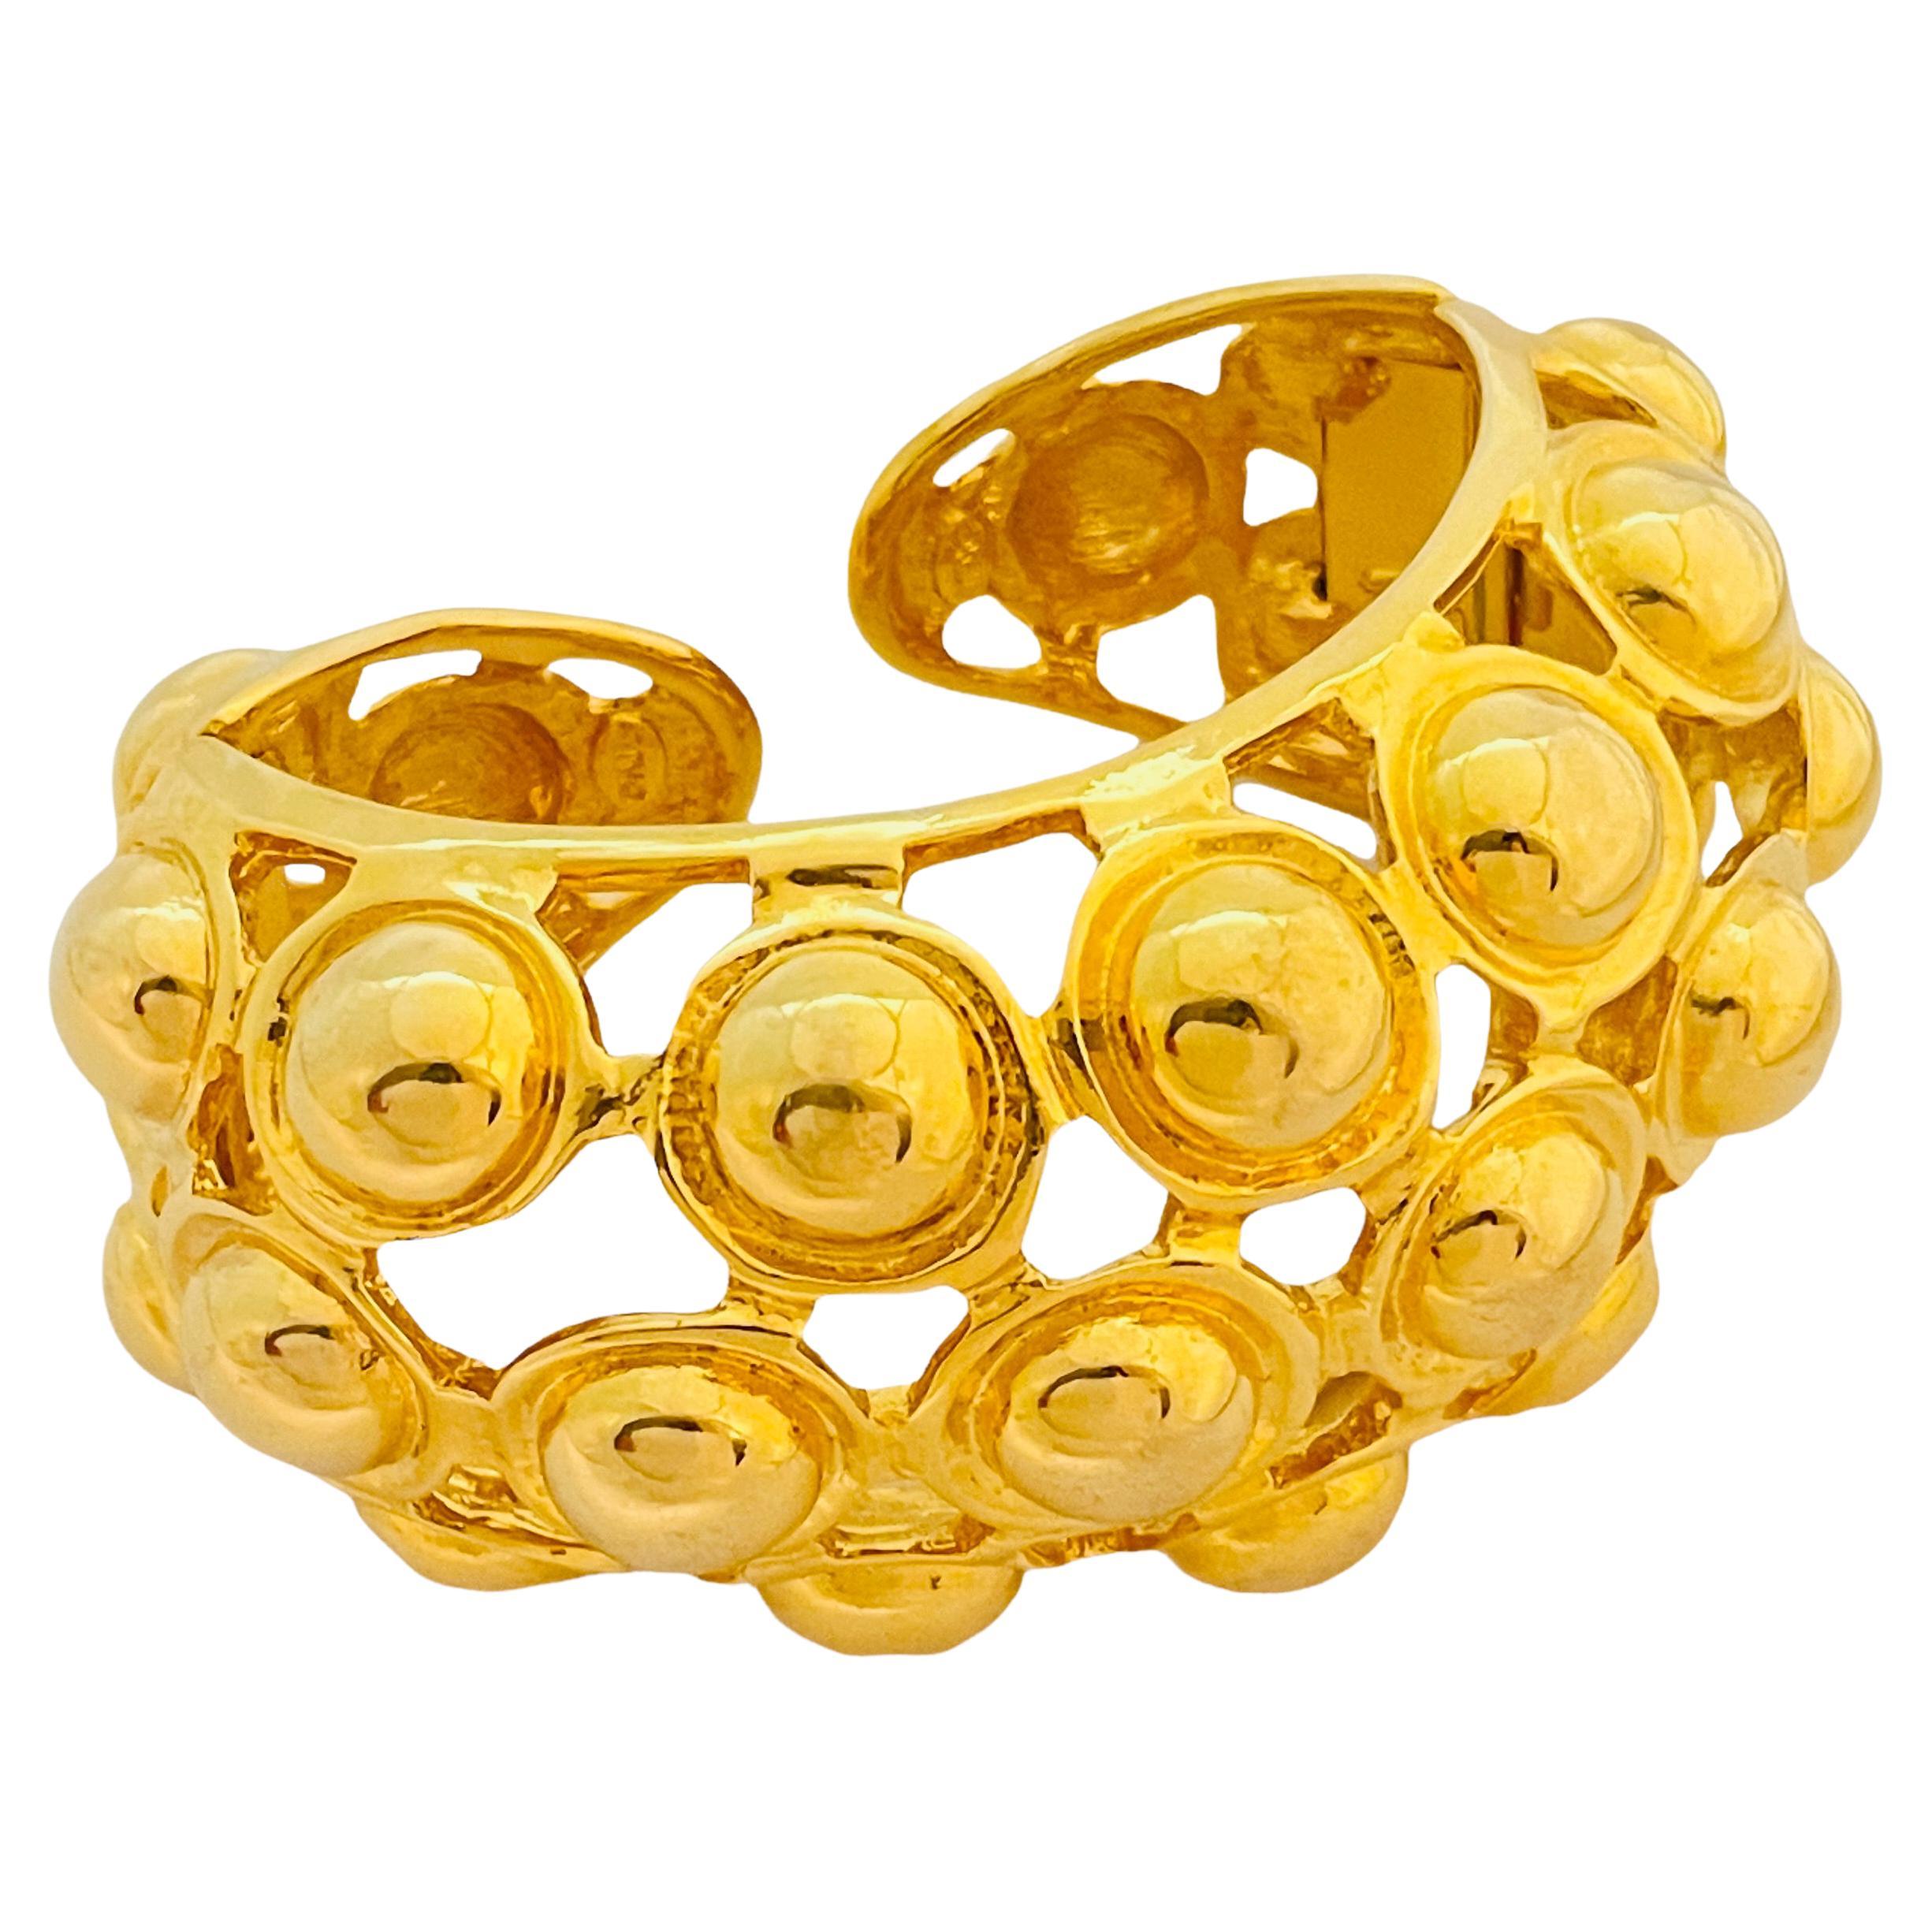 Vtg KJL KENNETH JAY LANE gold massive cuff bracelet designer runway